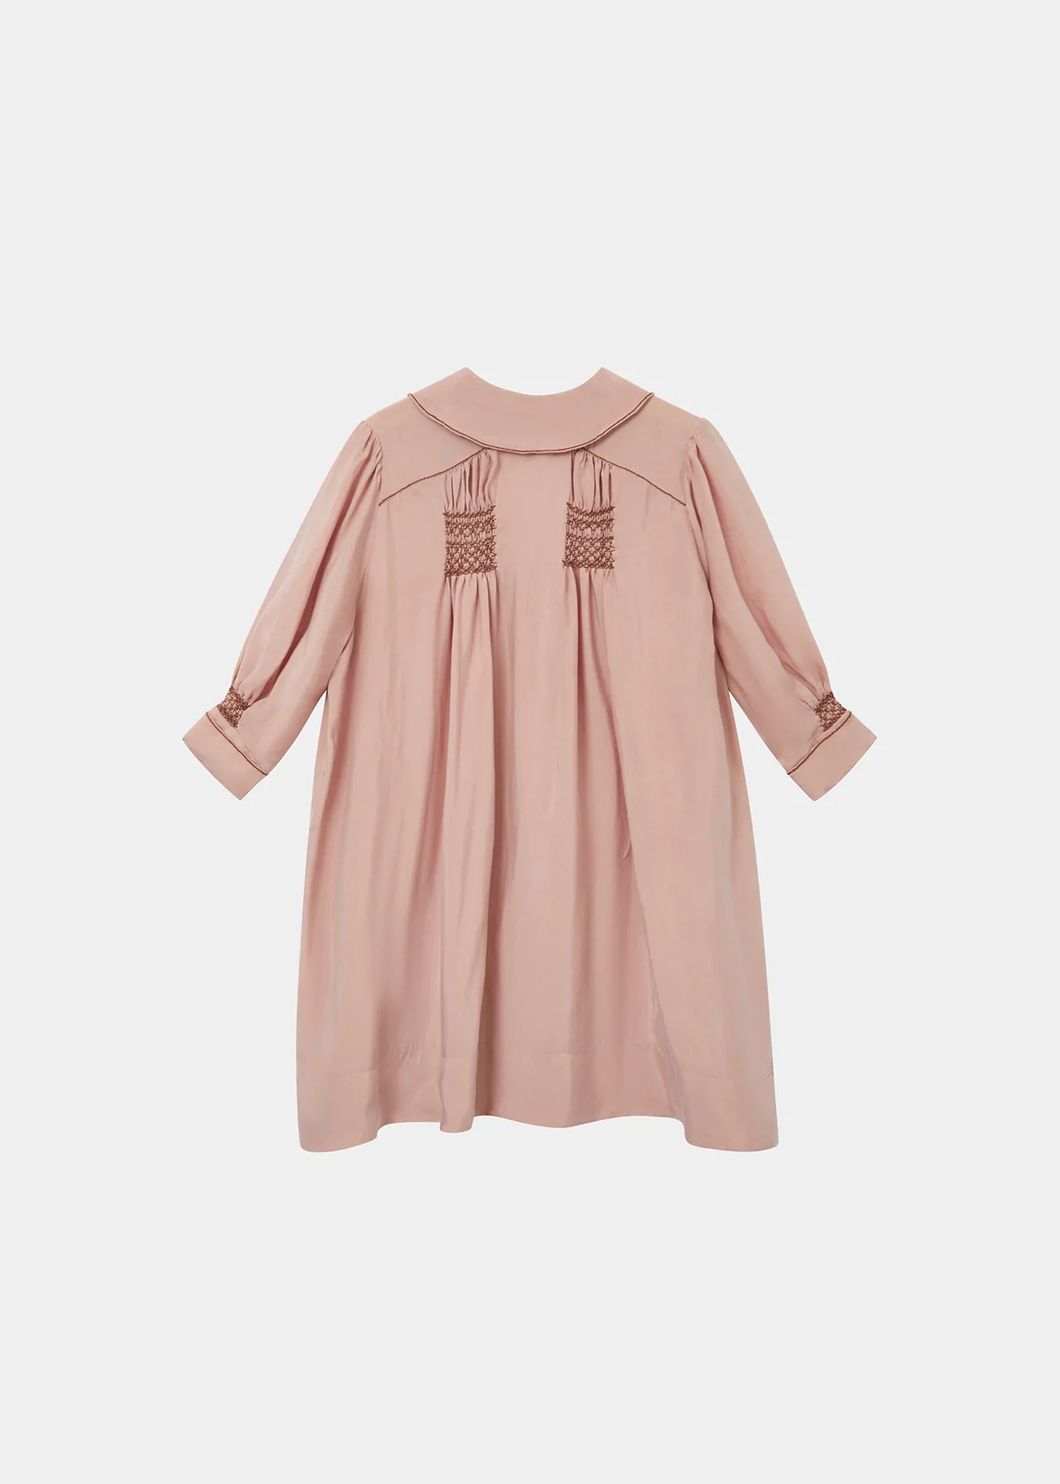 Caramel Aspen Dress - Pink - 6Y Last One